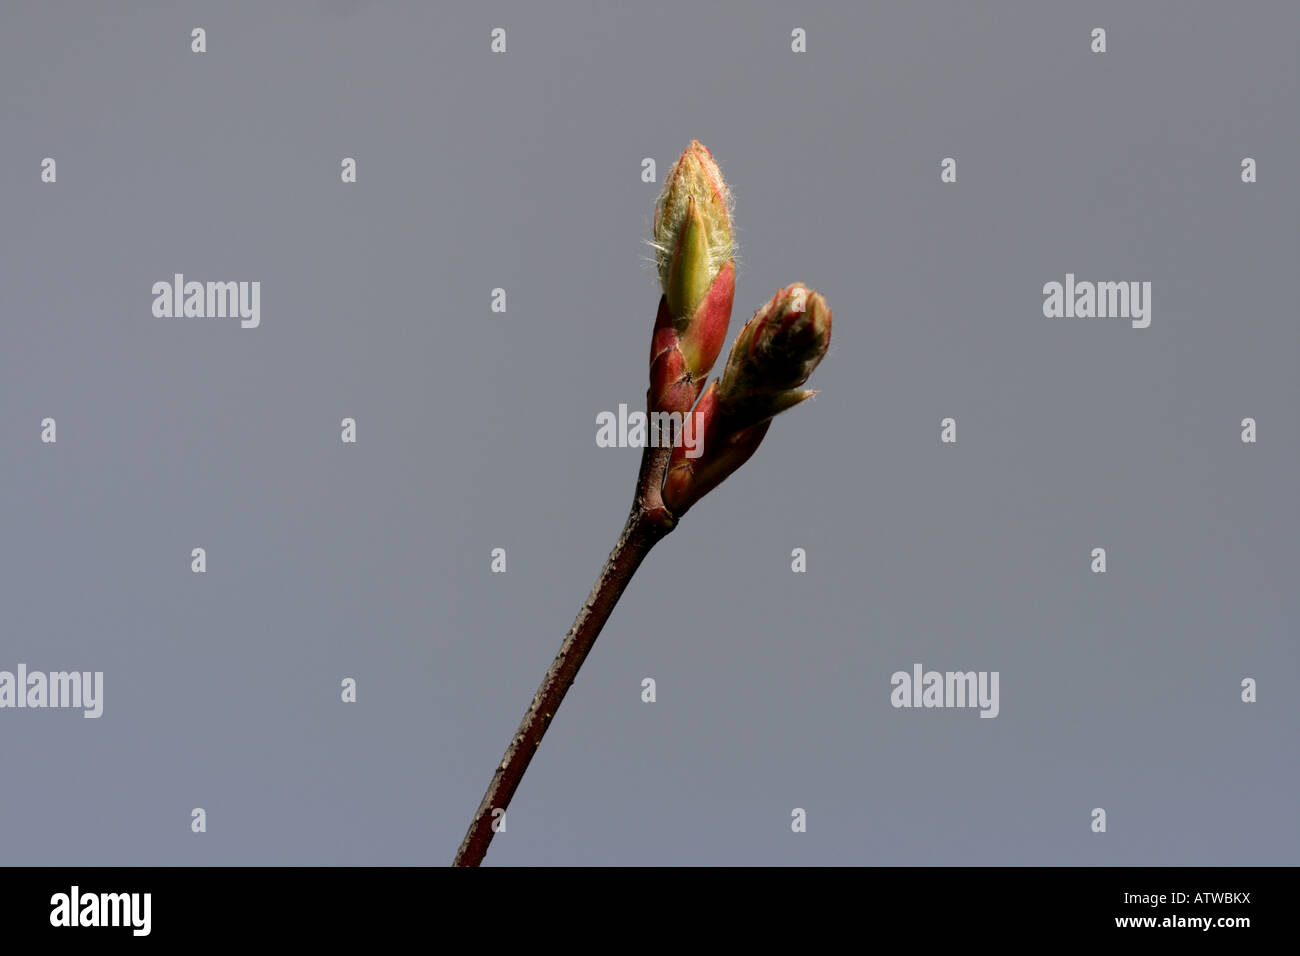 SCHNEEBEDECKTE MESPIL (Amelanchier ovalis) Blattknospe Stockfoto